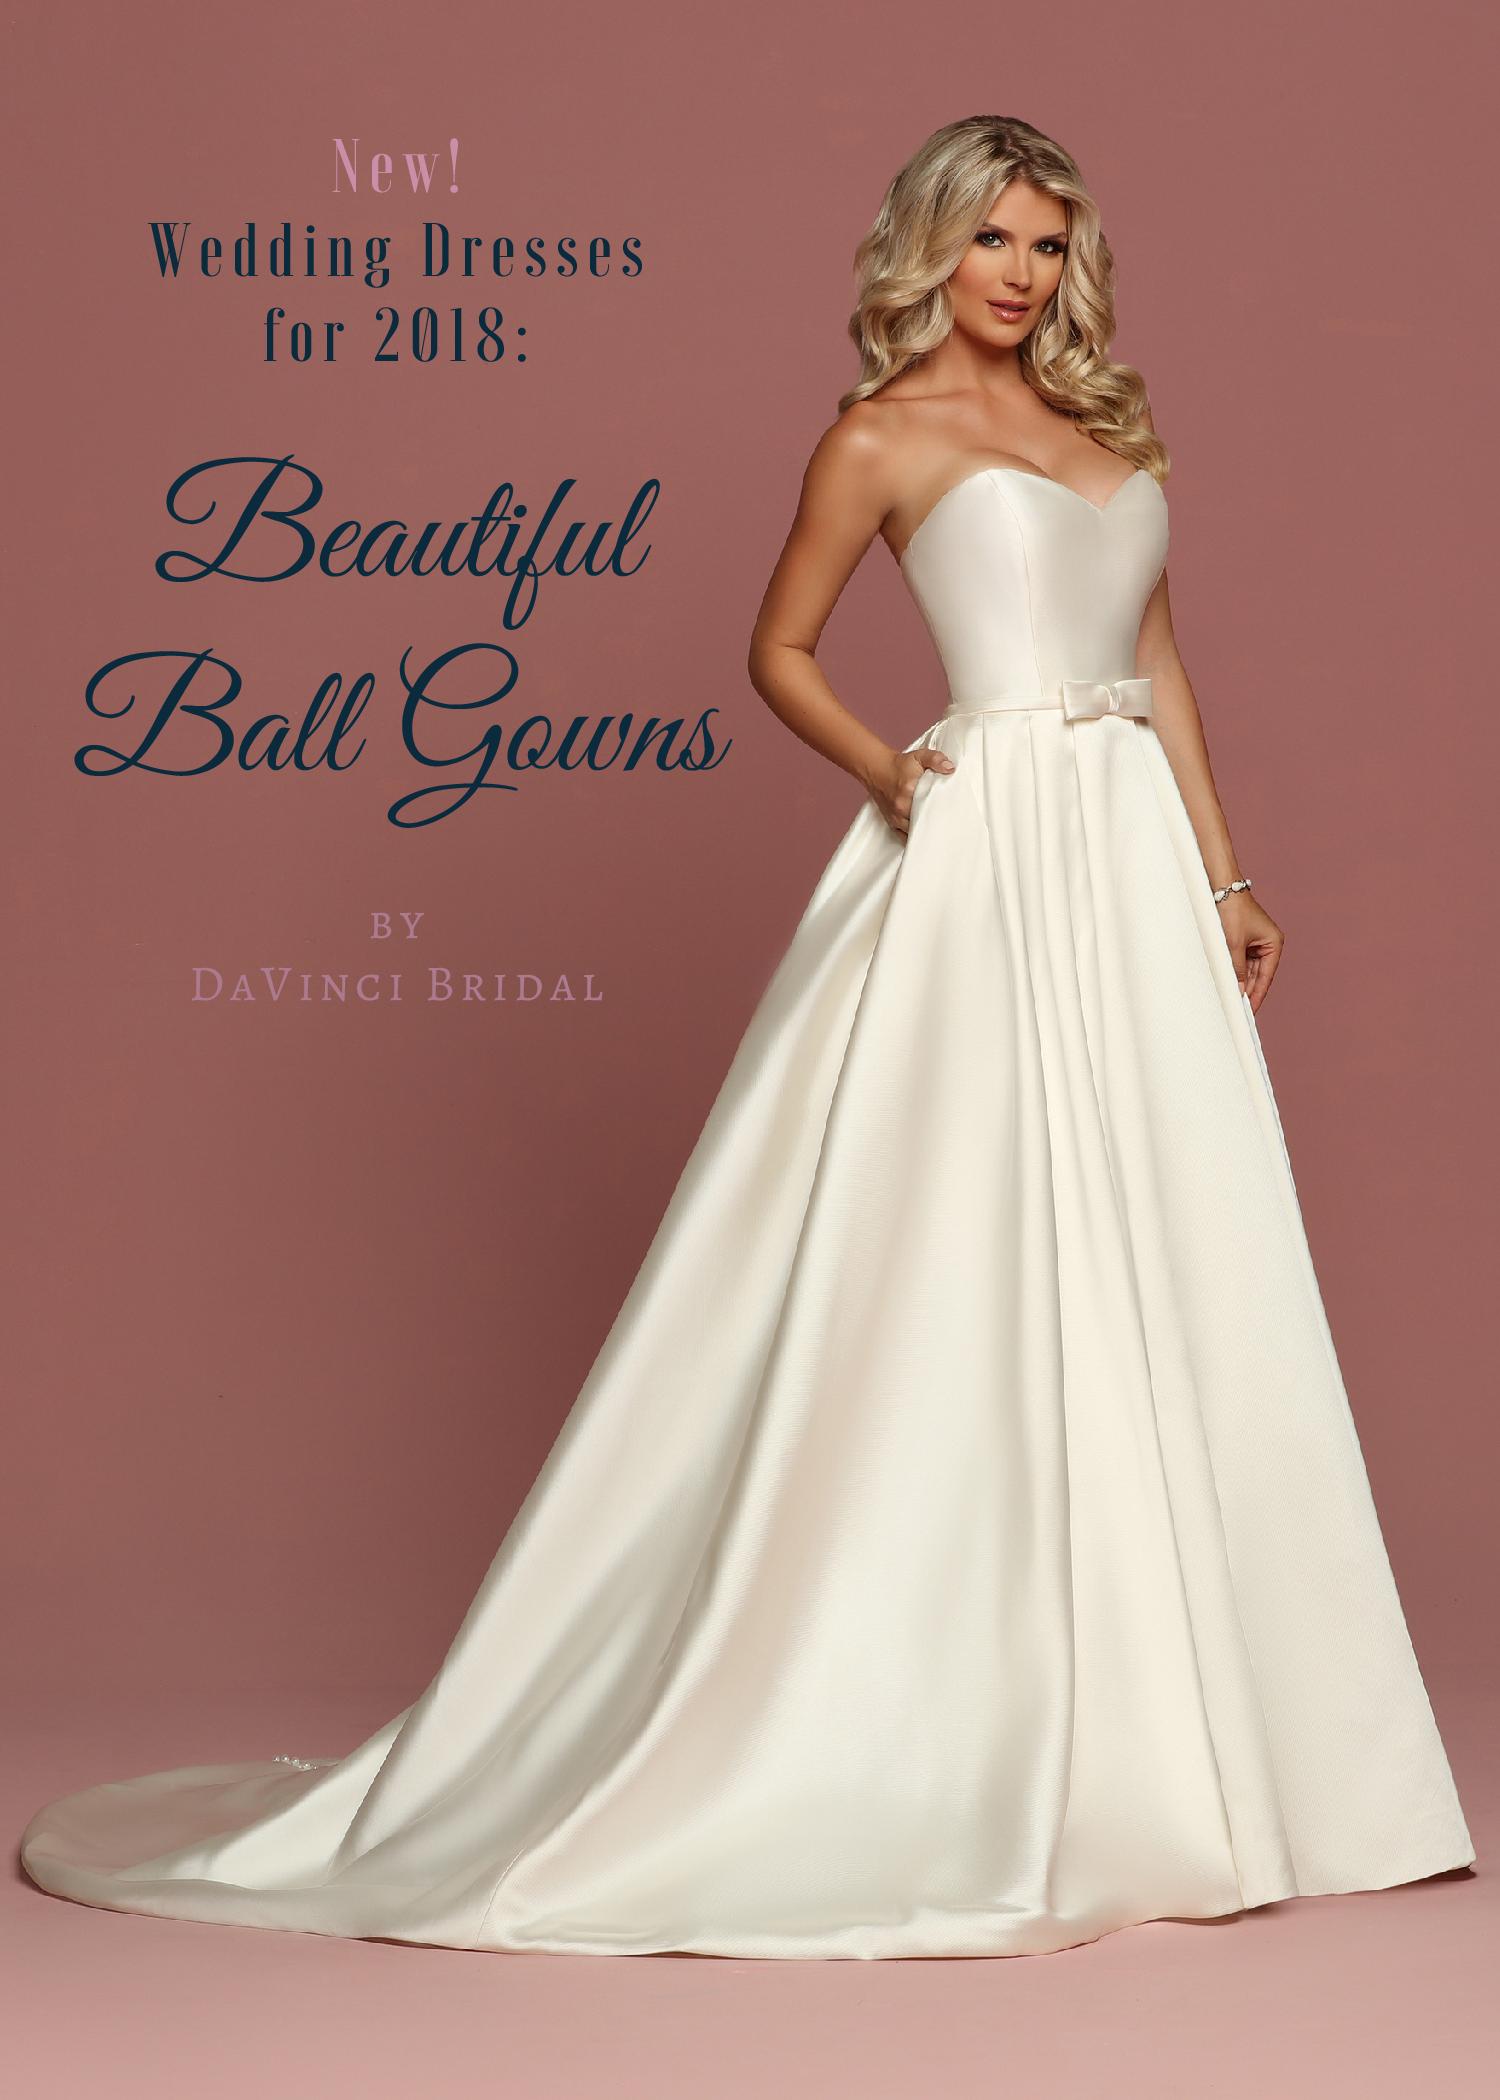 Beautiful Ball Gowns for 2018 | DaVinci Bridal Blog